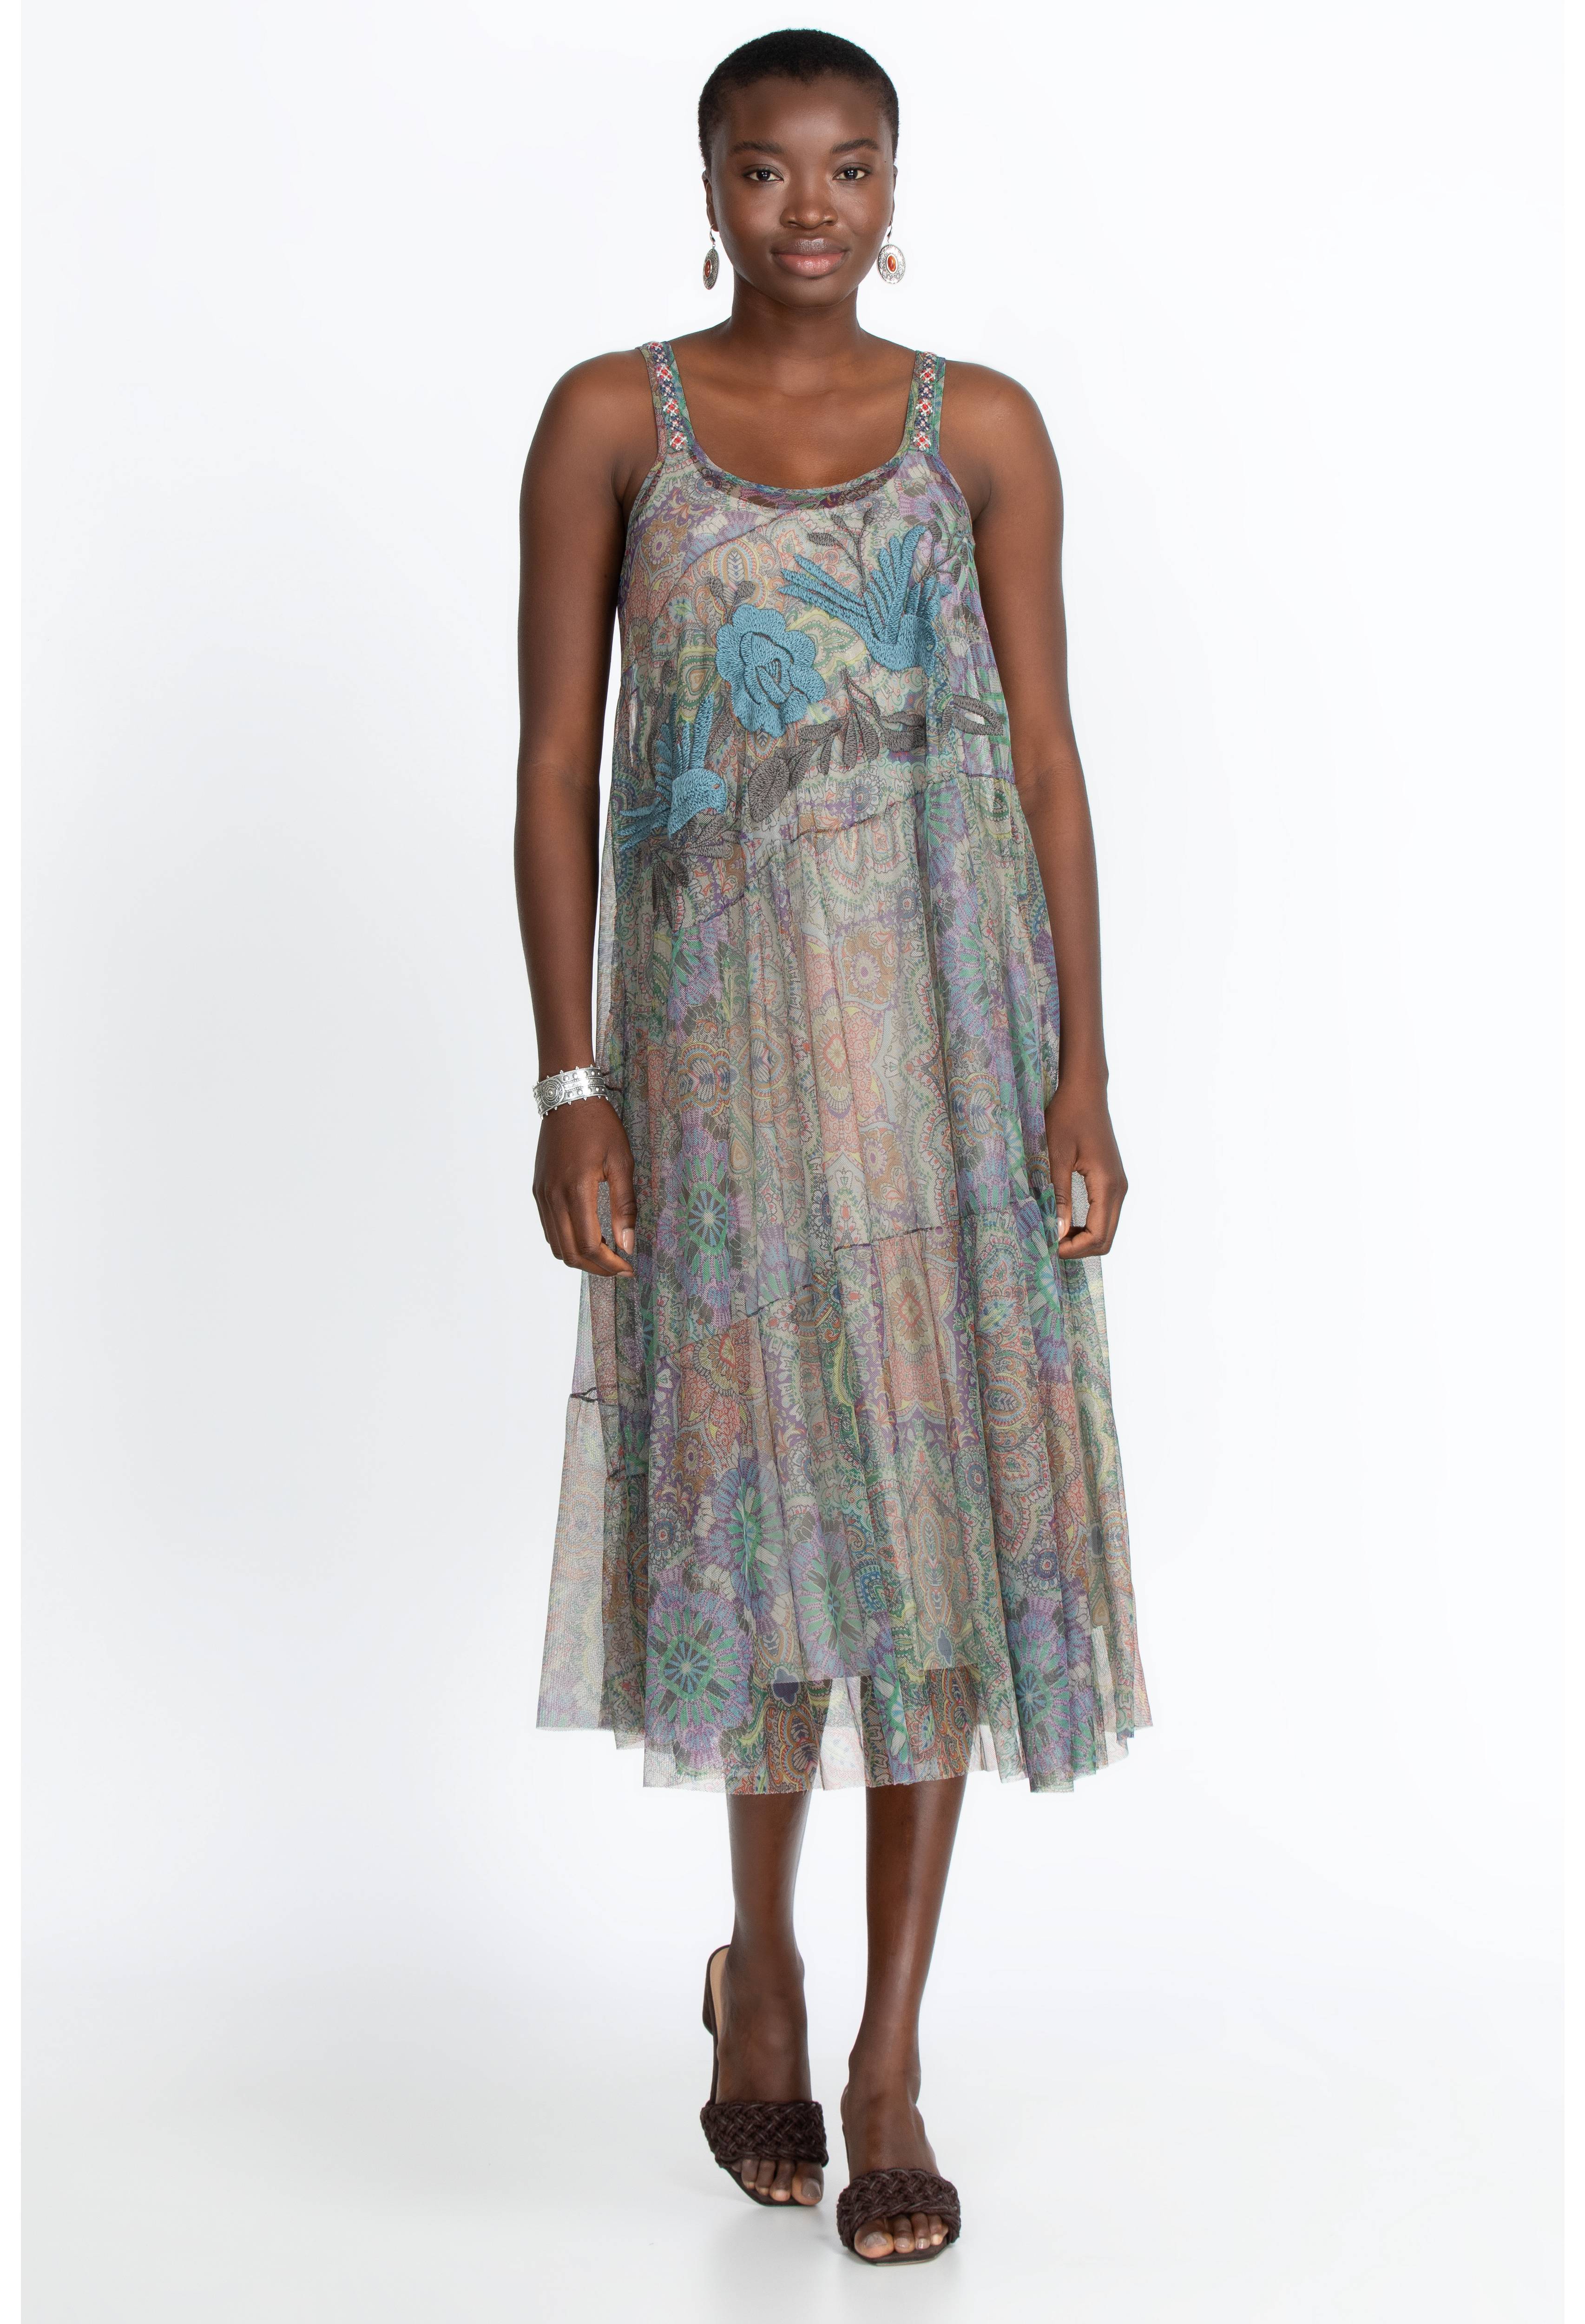 Matisse Mesh Dress, , large image number 1